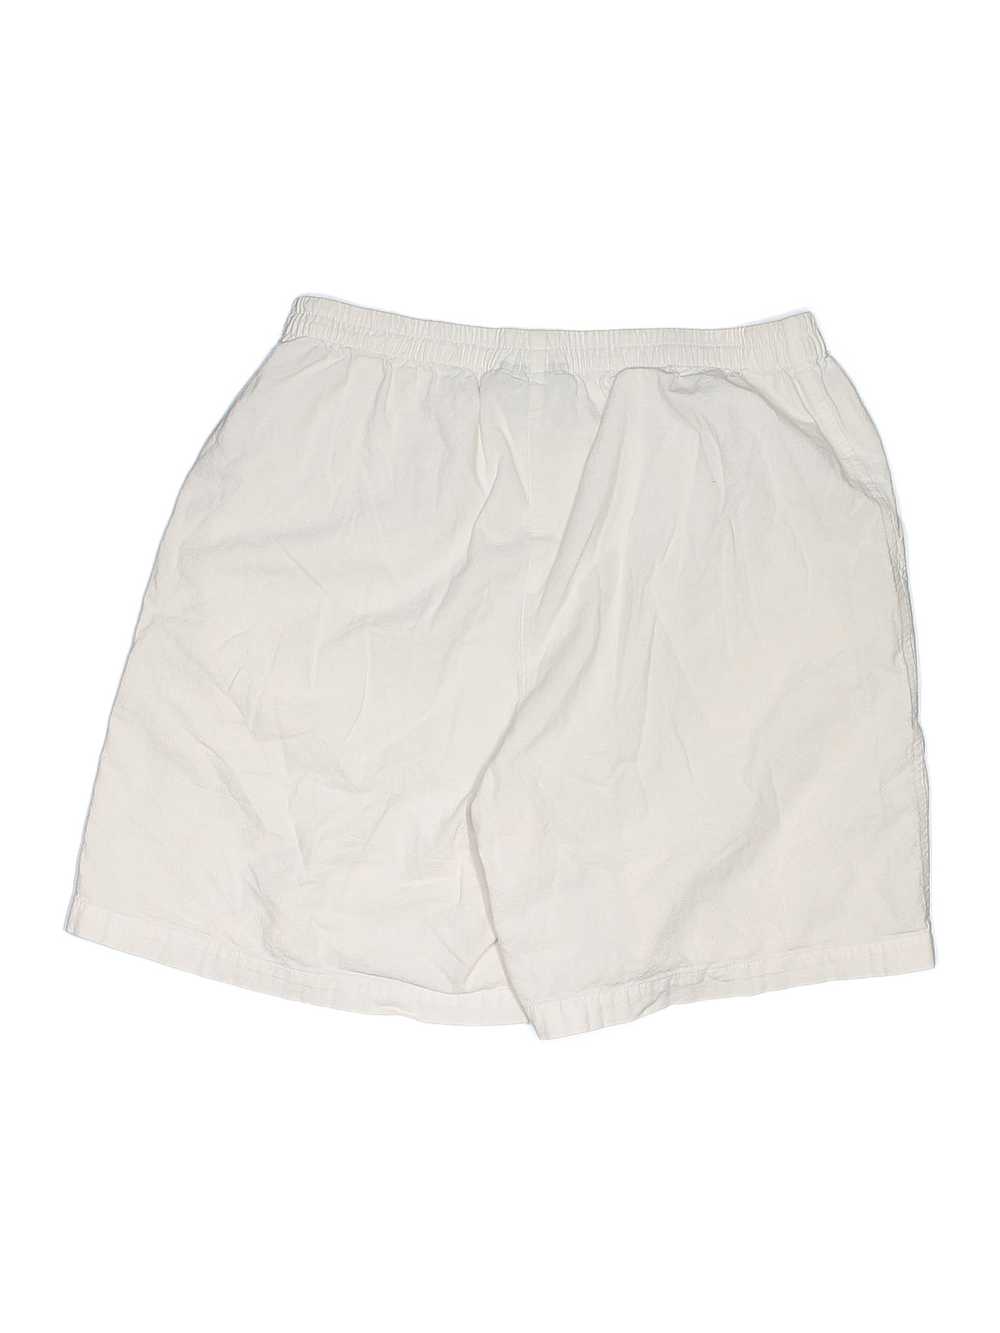 Cathy Daniels Women White Casual Skirt M - image 2